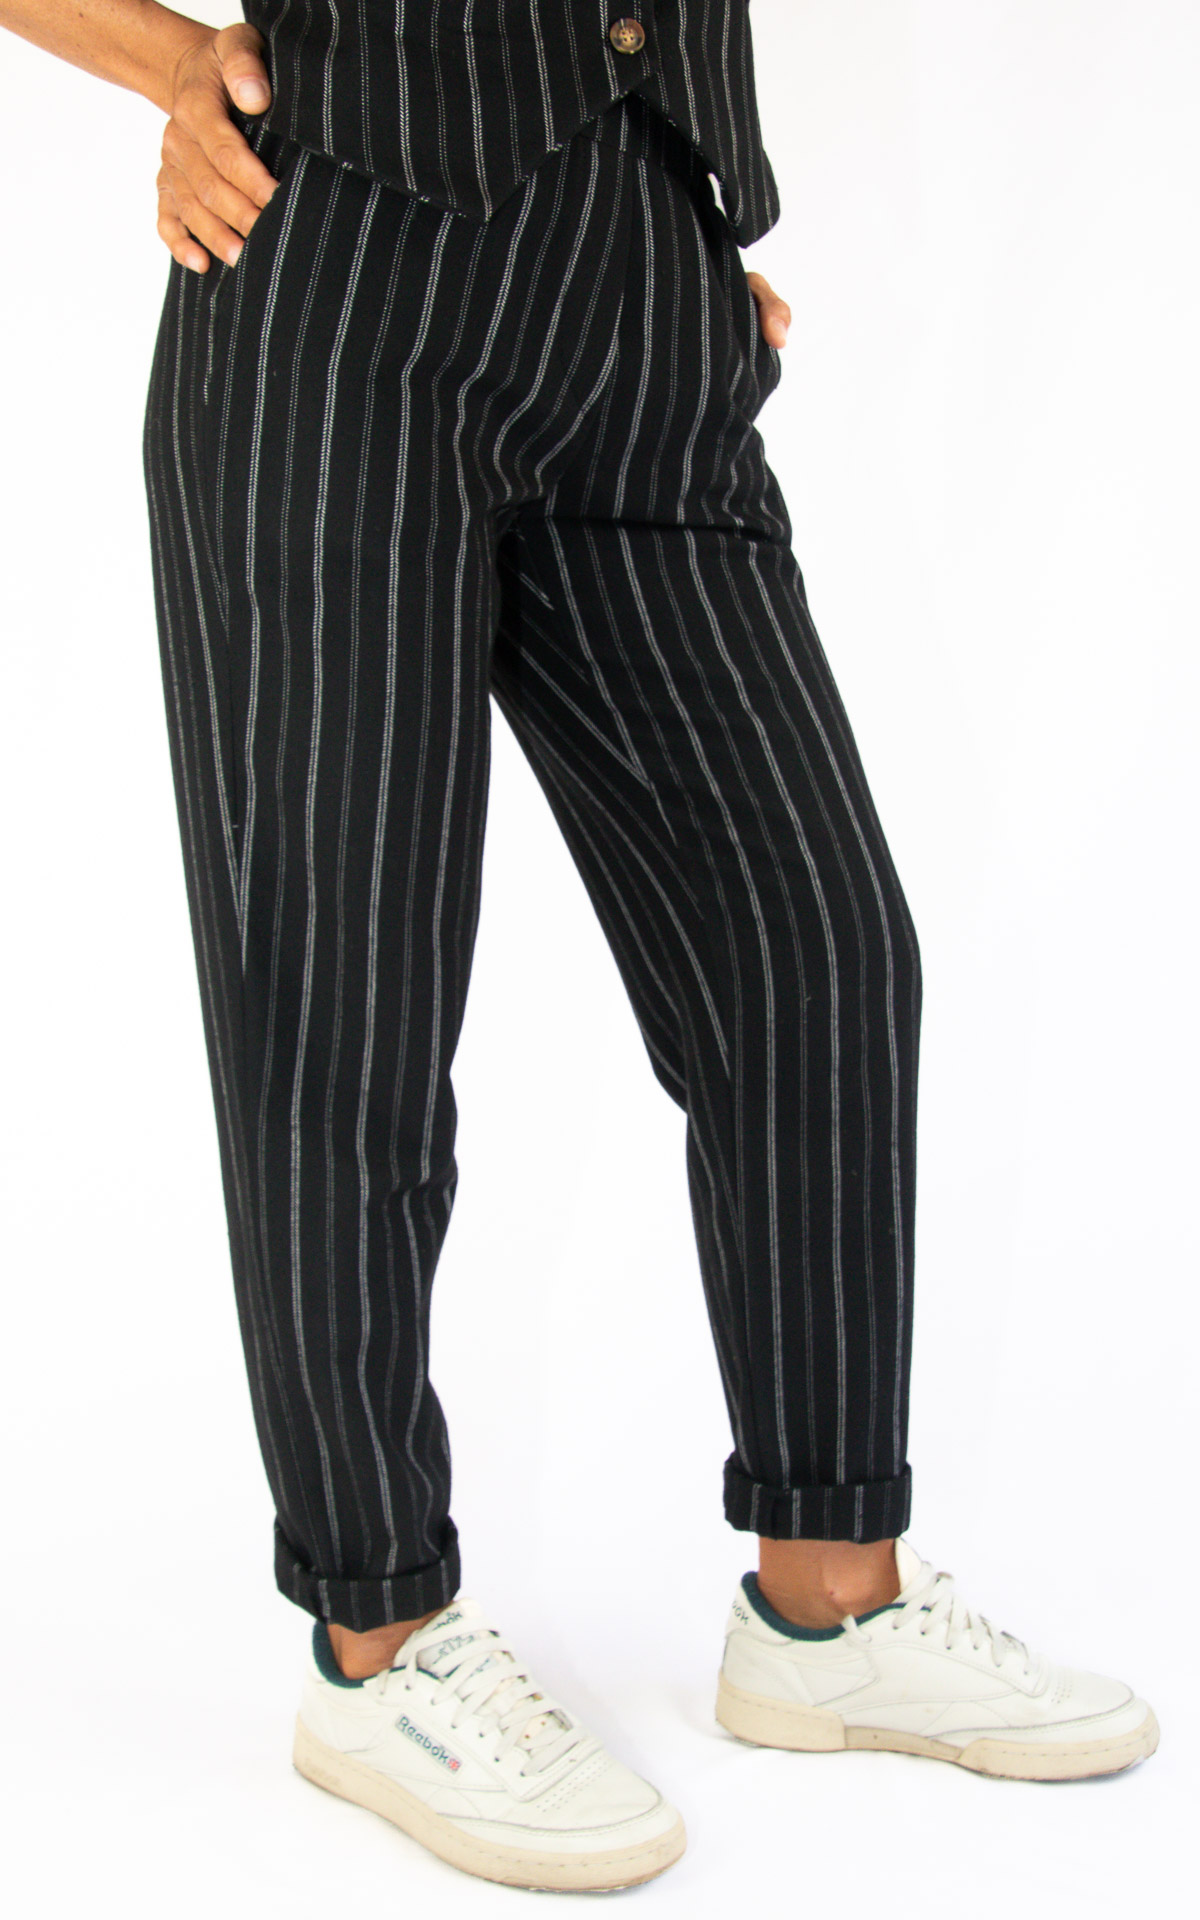 Initial - pantalone micro riga - nero/bianco